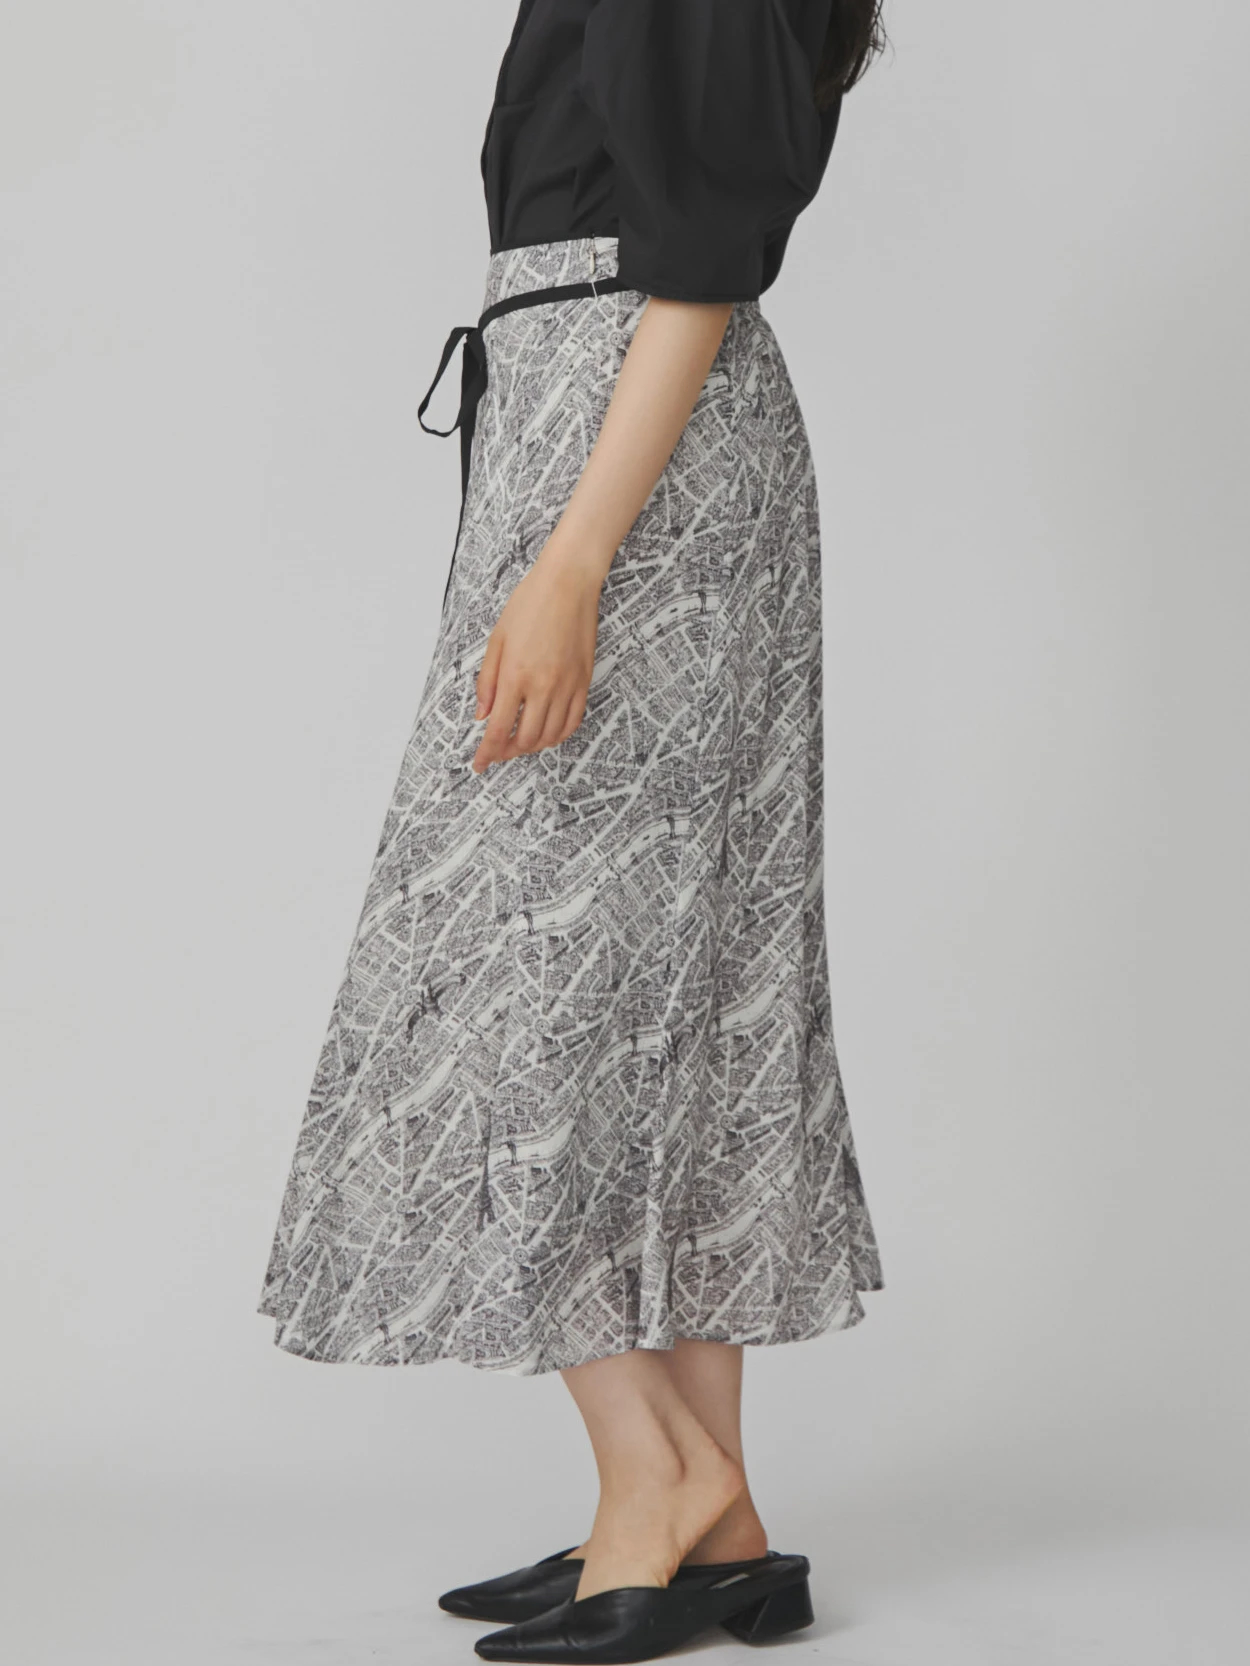 MAP柄マーメイドスカート | レディースファッション通販のTONAL